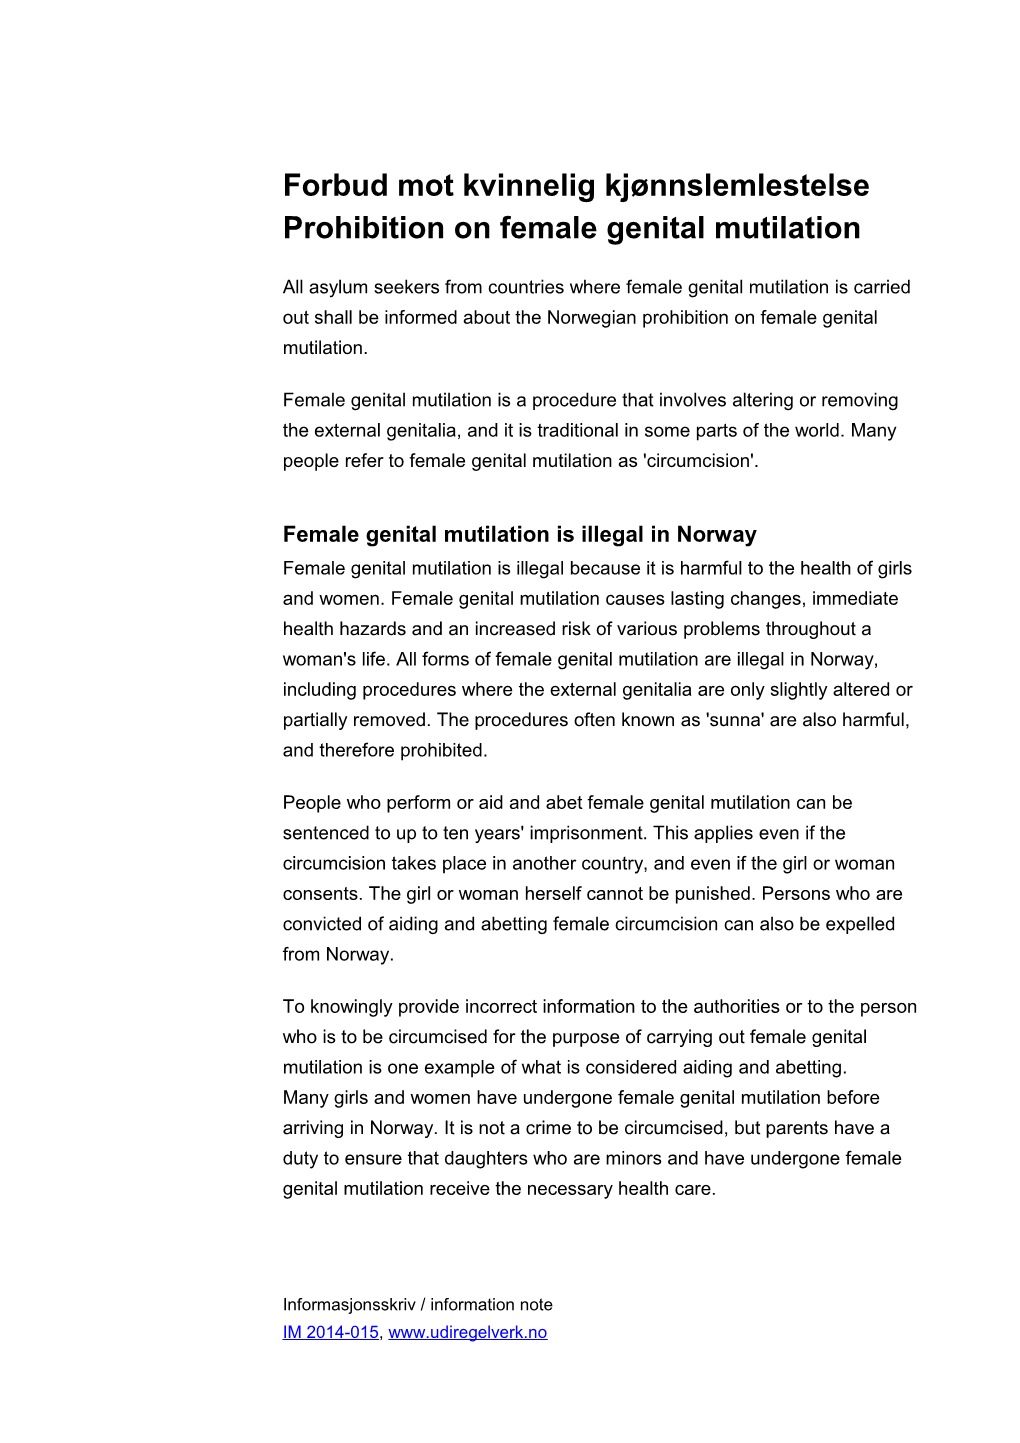 Prohibition on Female Genital Mutilation